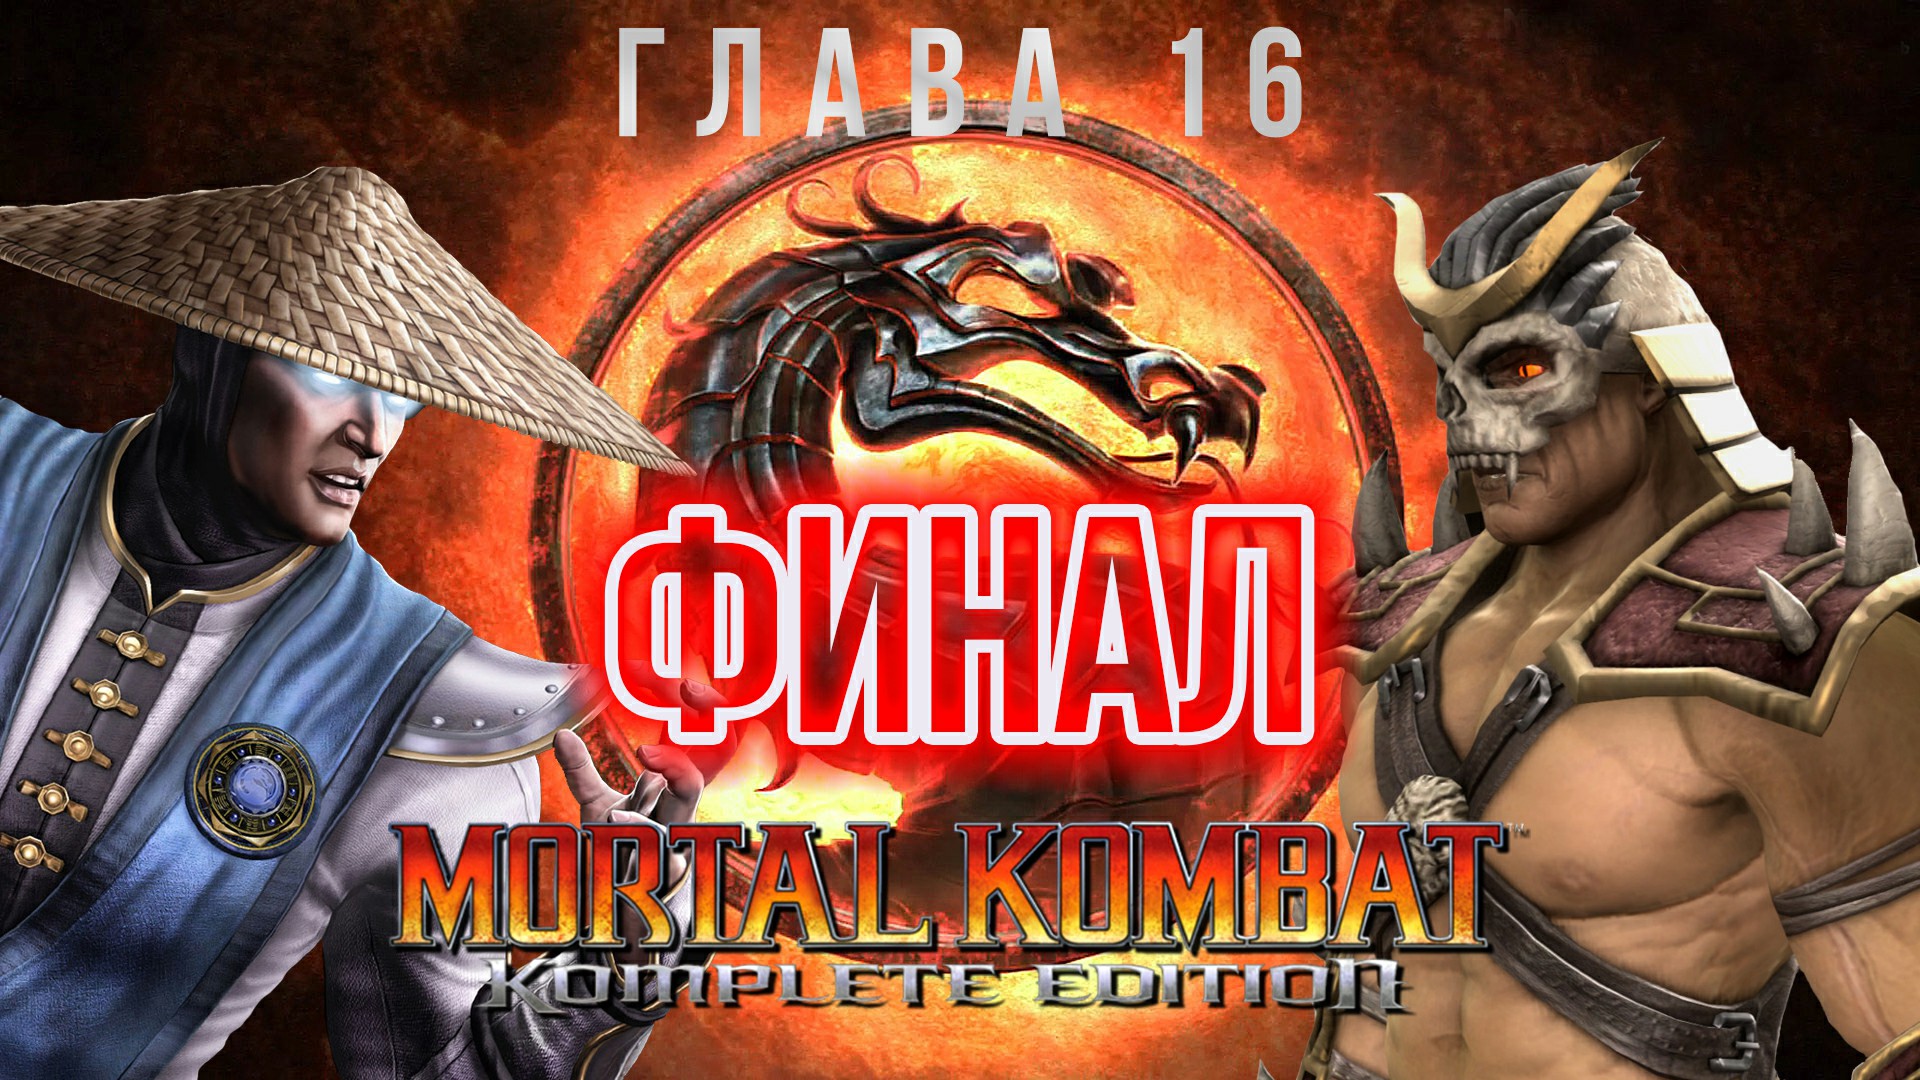 Mortal Kombat Komplete Edition Глава 16 - Raiden Финал без комментариев